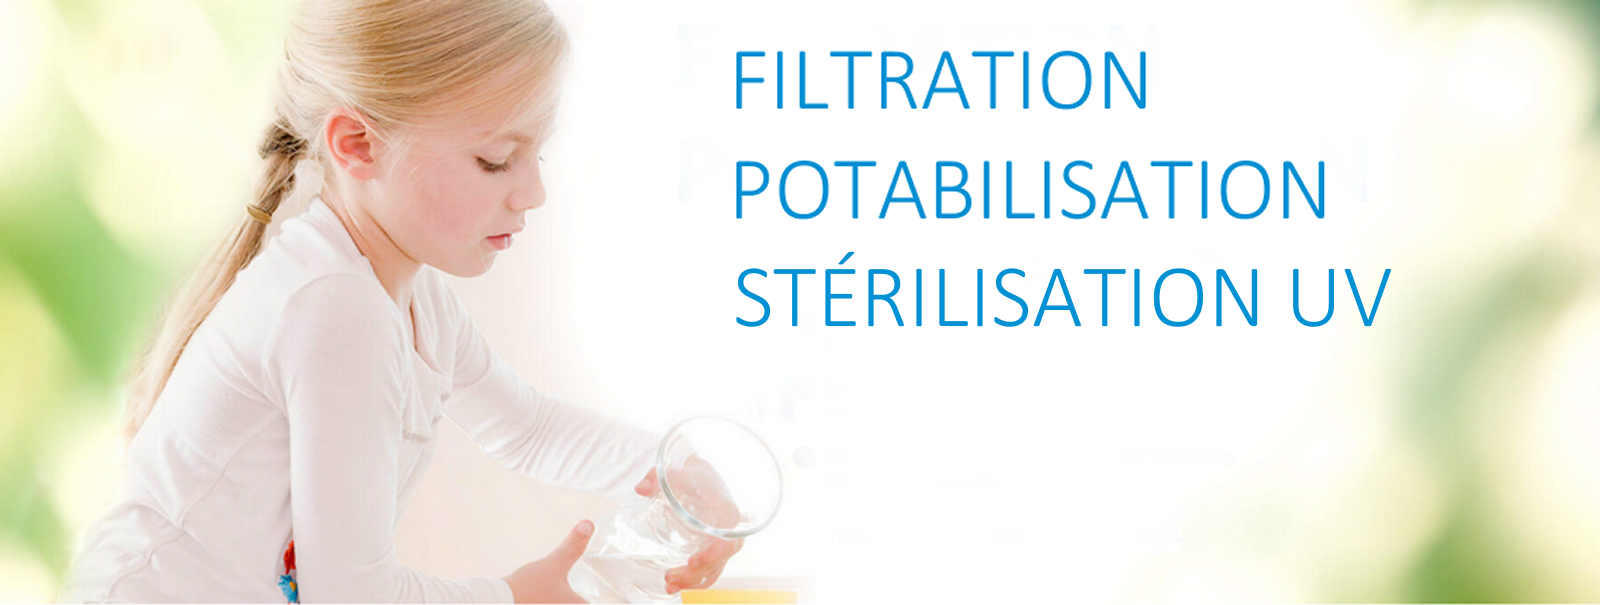 sterilisation-uv-potabilisation-Filtration